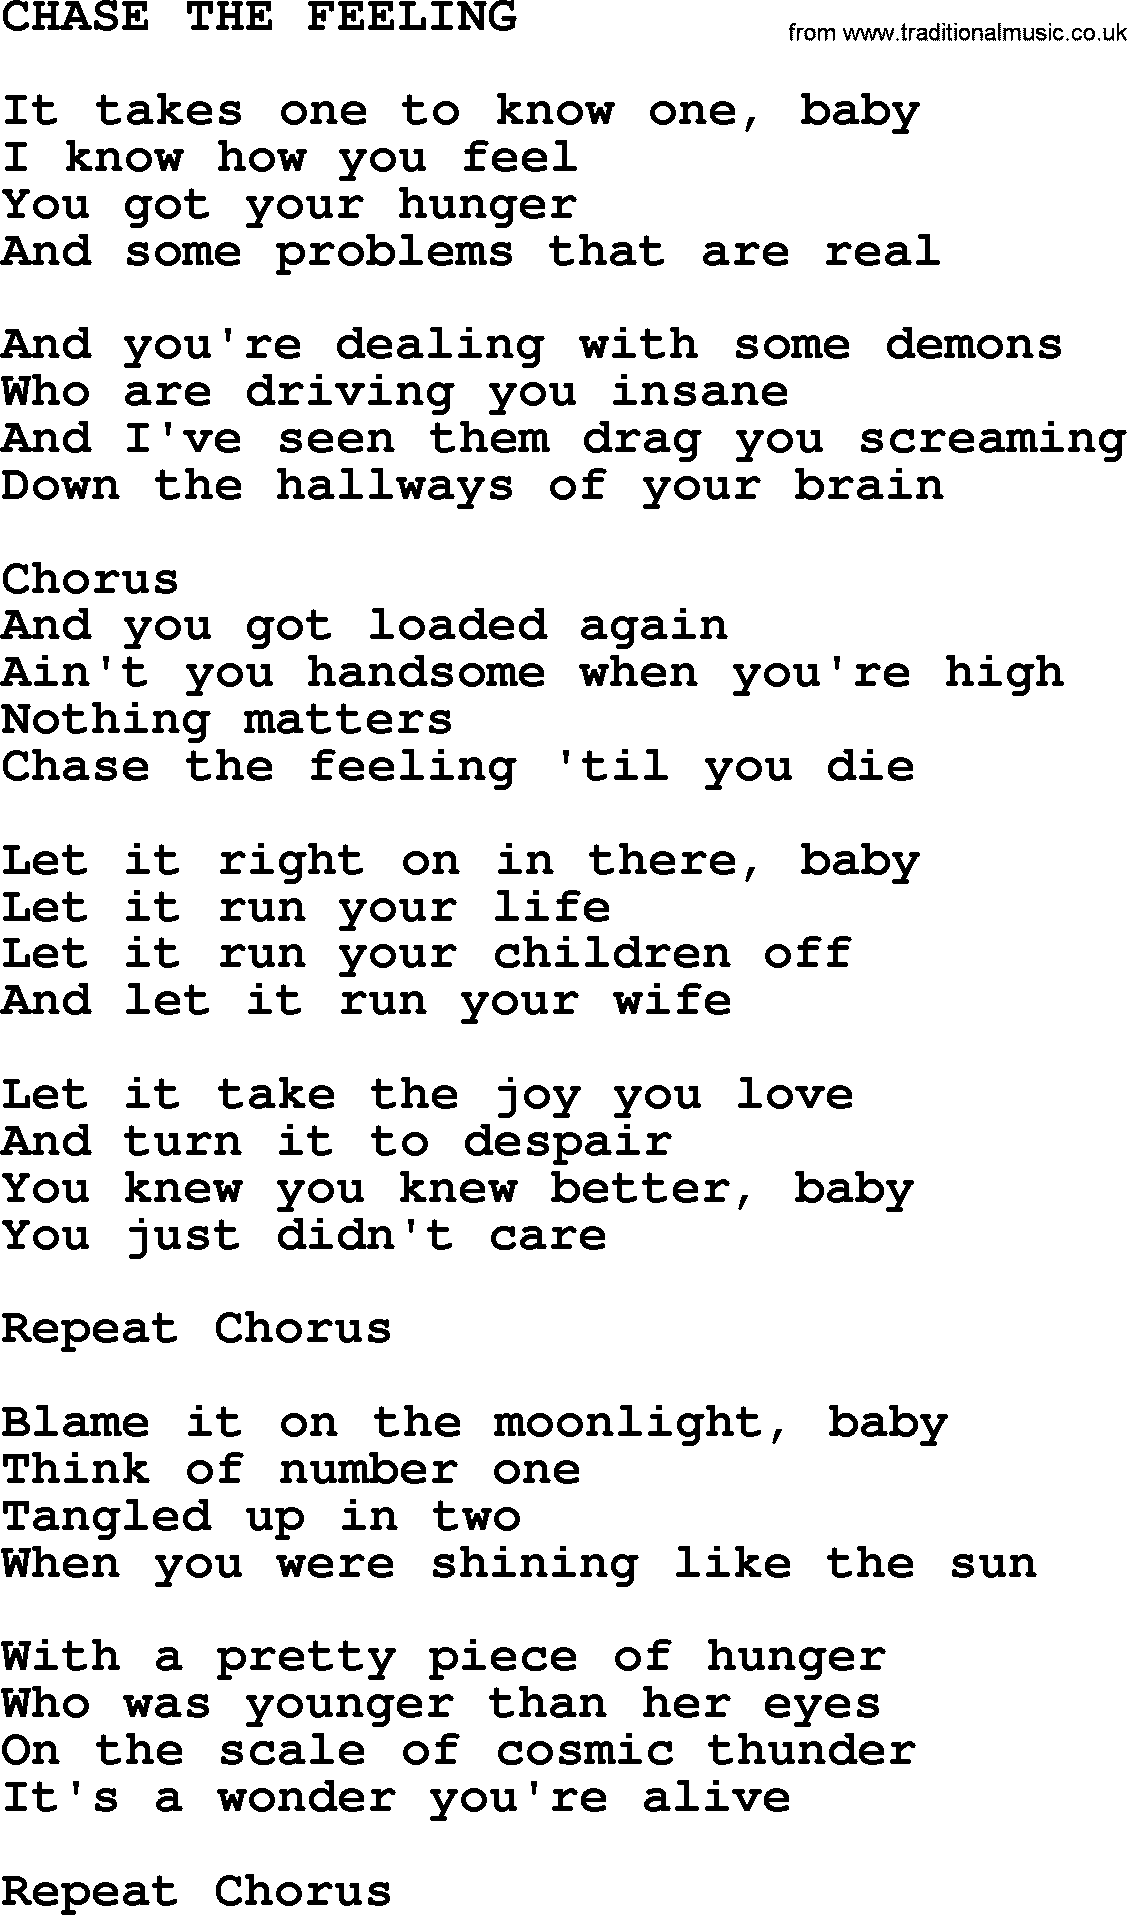 Kris Kristofferson song: Chase The Feeling lyrics